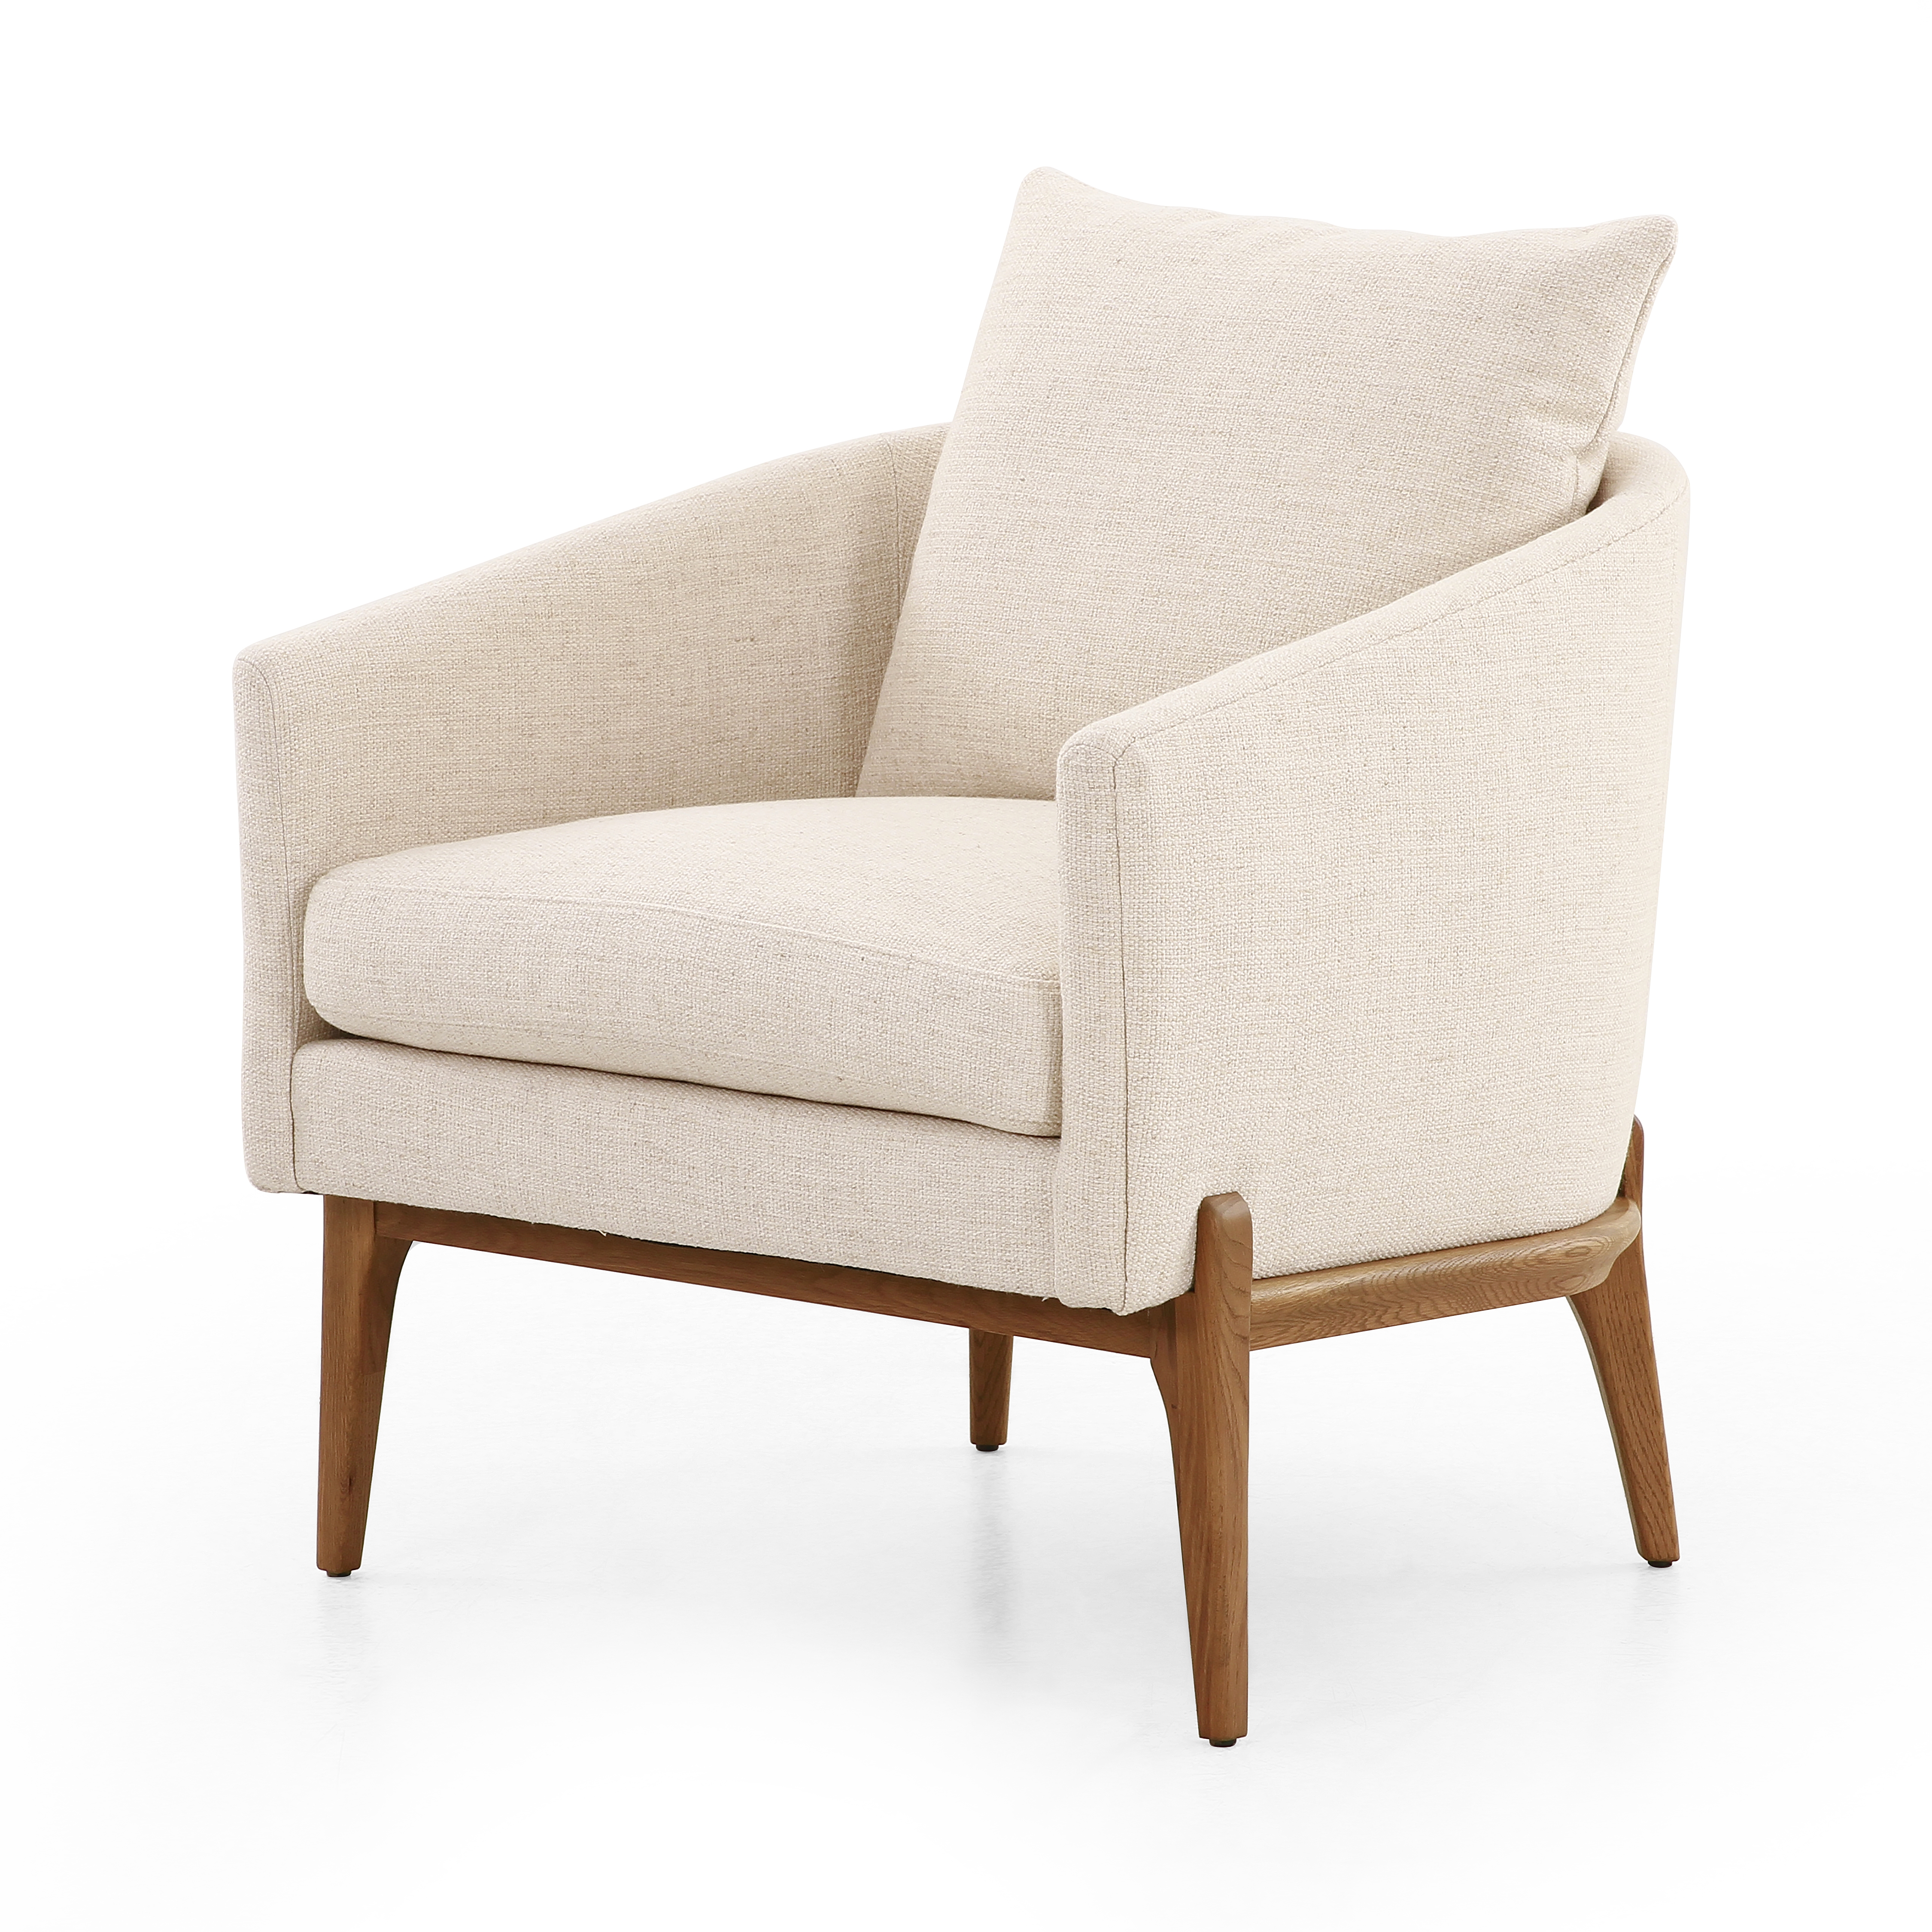 Copeland Chair-Thames Cream - Image 0